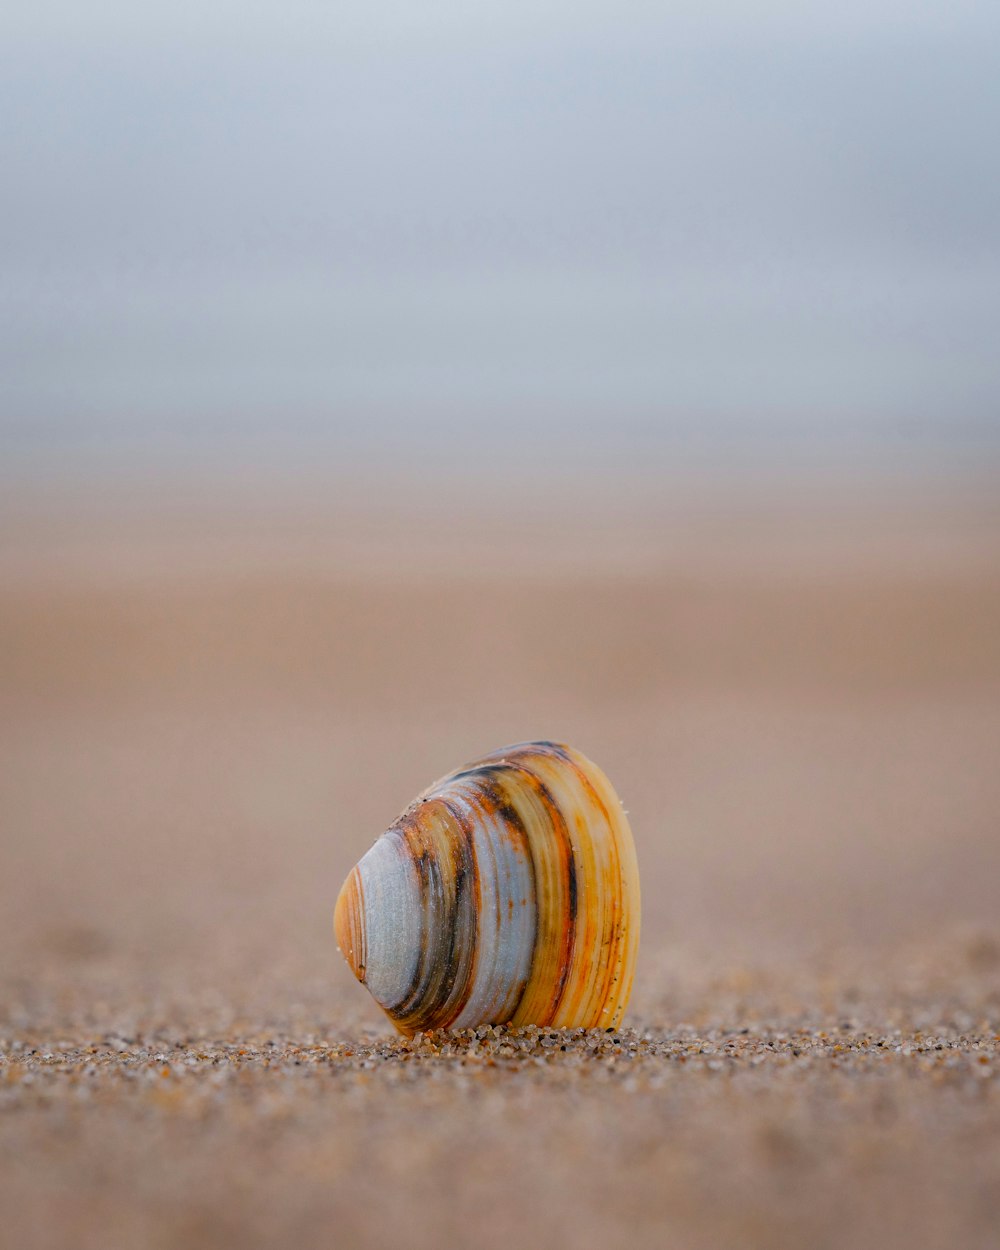 a shell on the sand of a beach